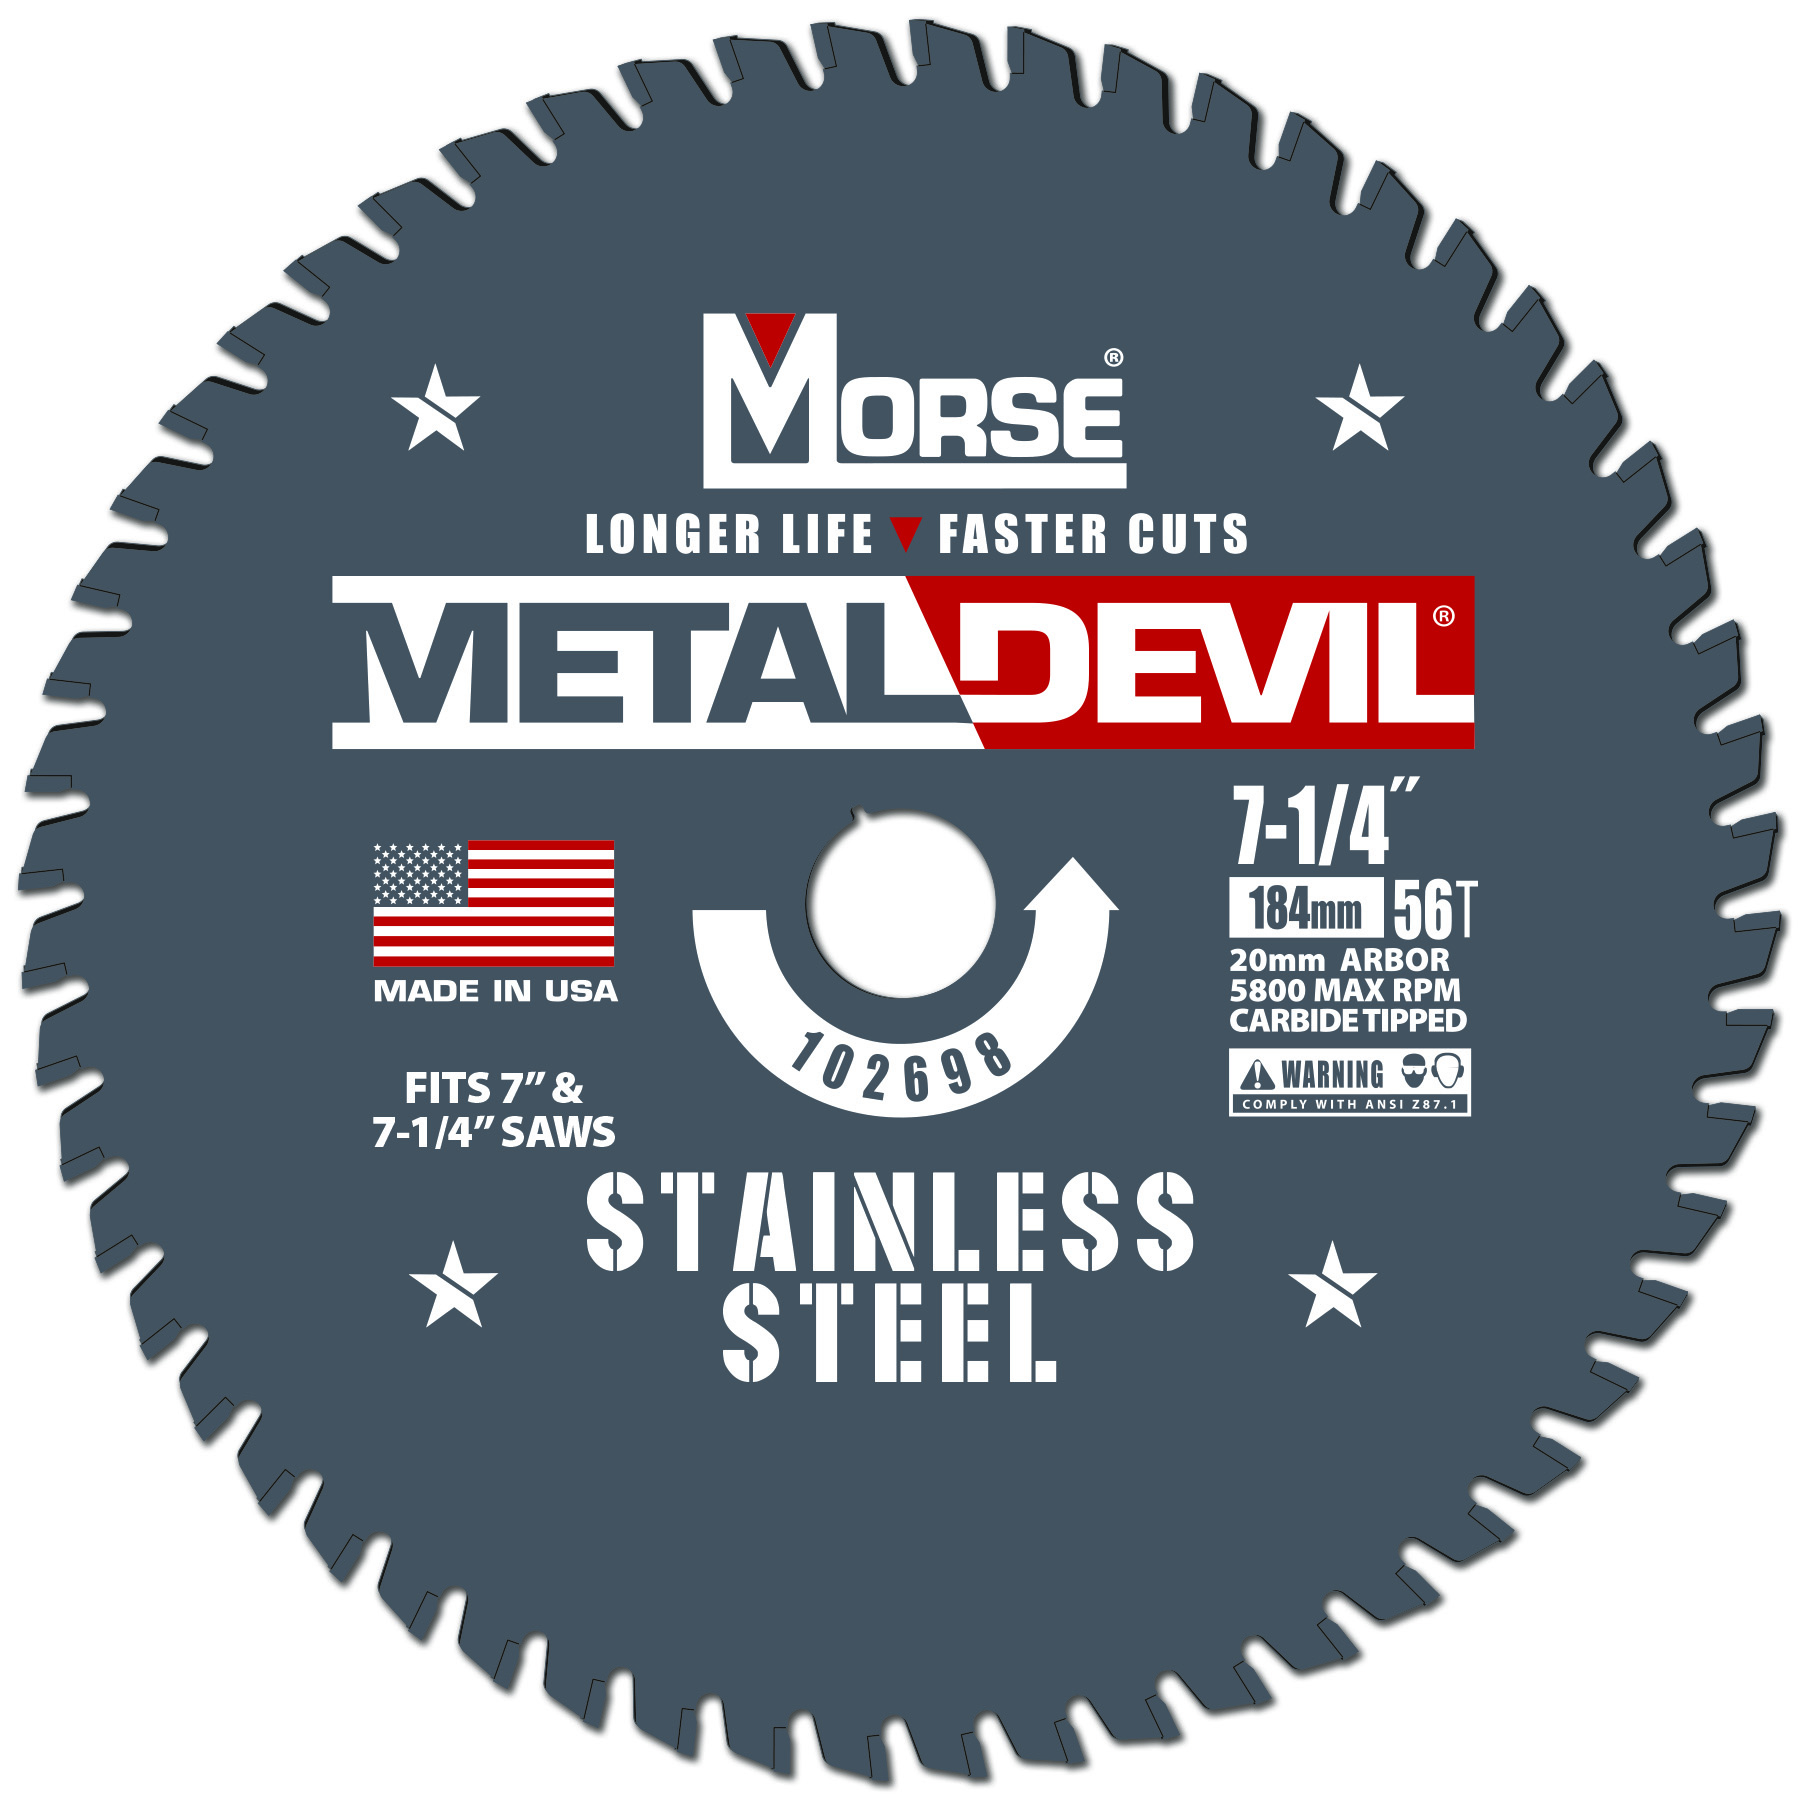 Morse Metal Devil Blade